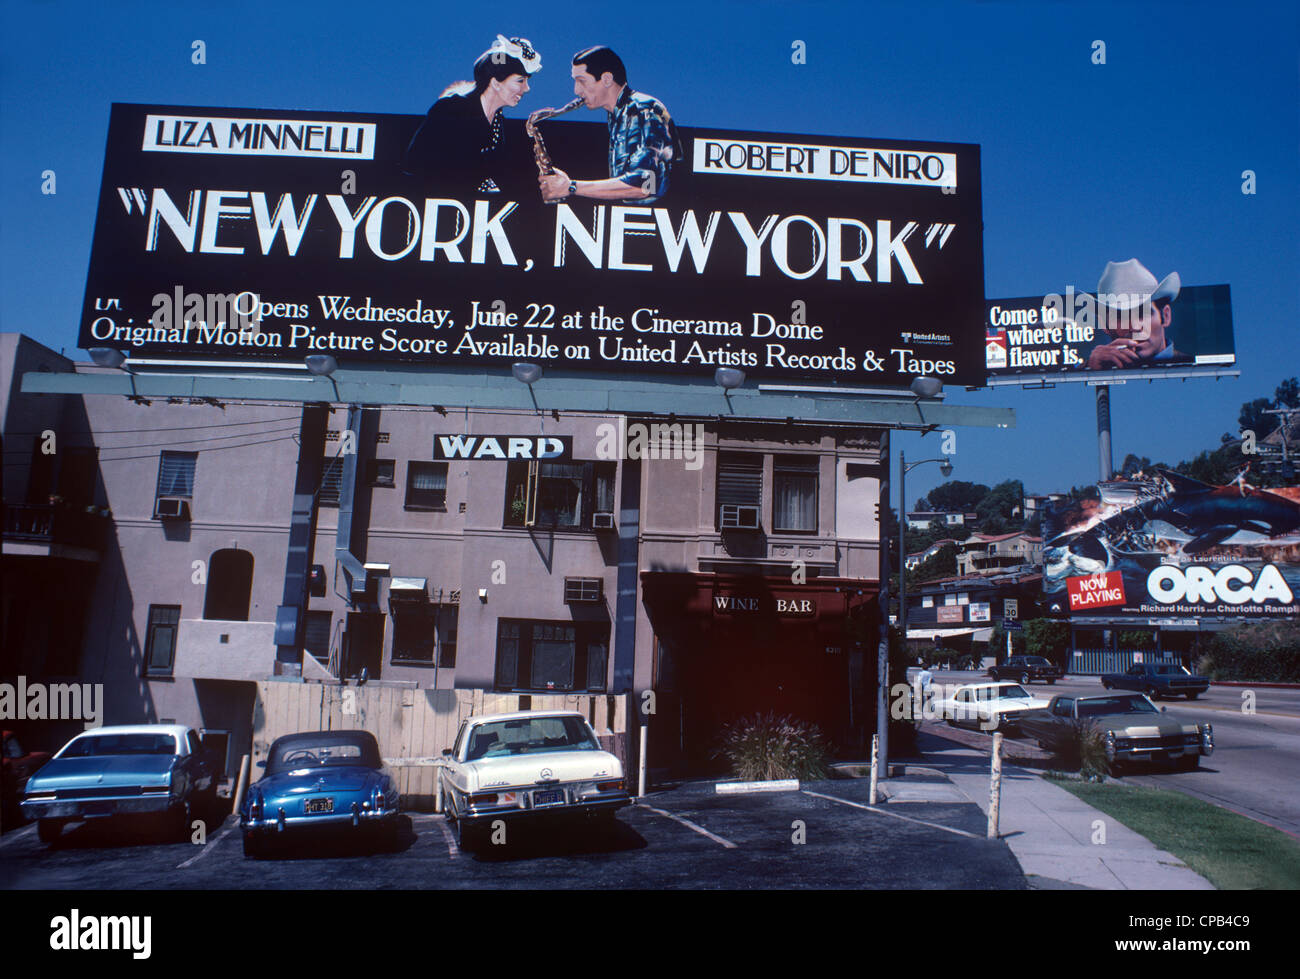 Billboard for movie New York, New York with Robert DeNiro and Liza Minnelli circa 1977 Stock Photo